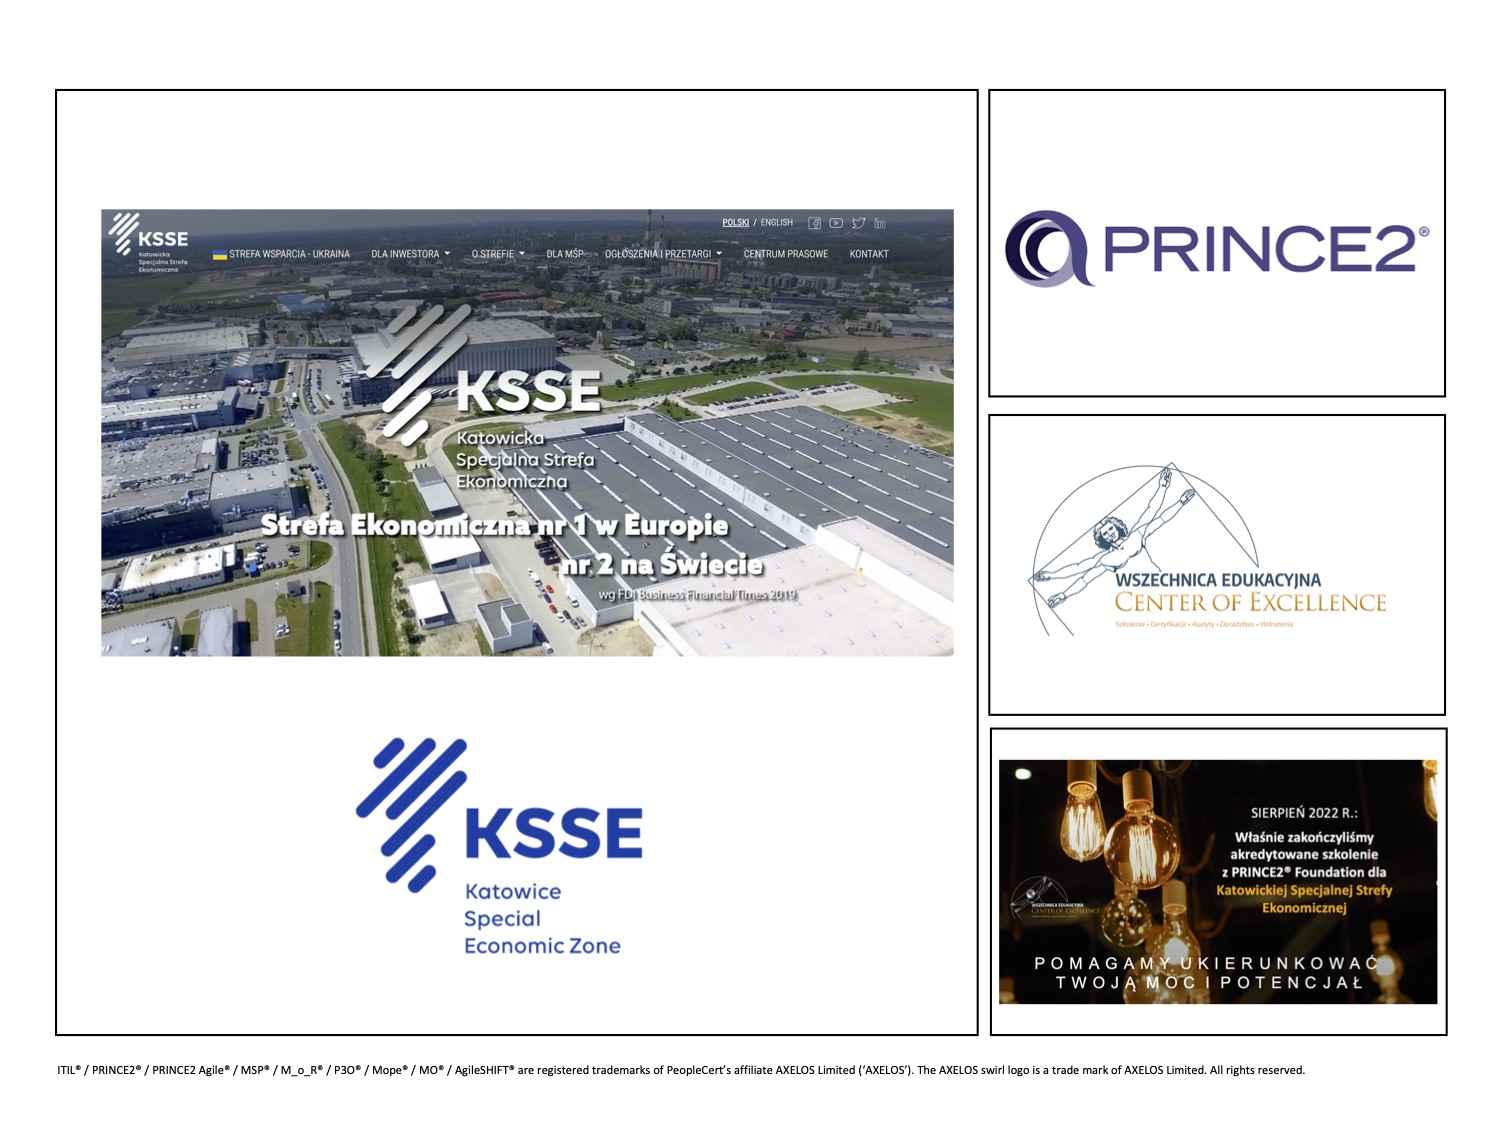 KSSE - PRINCE2 - Wszechnnica Edukacyjna.jpg